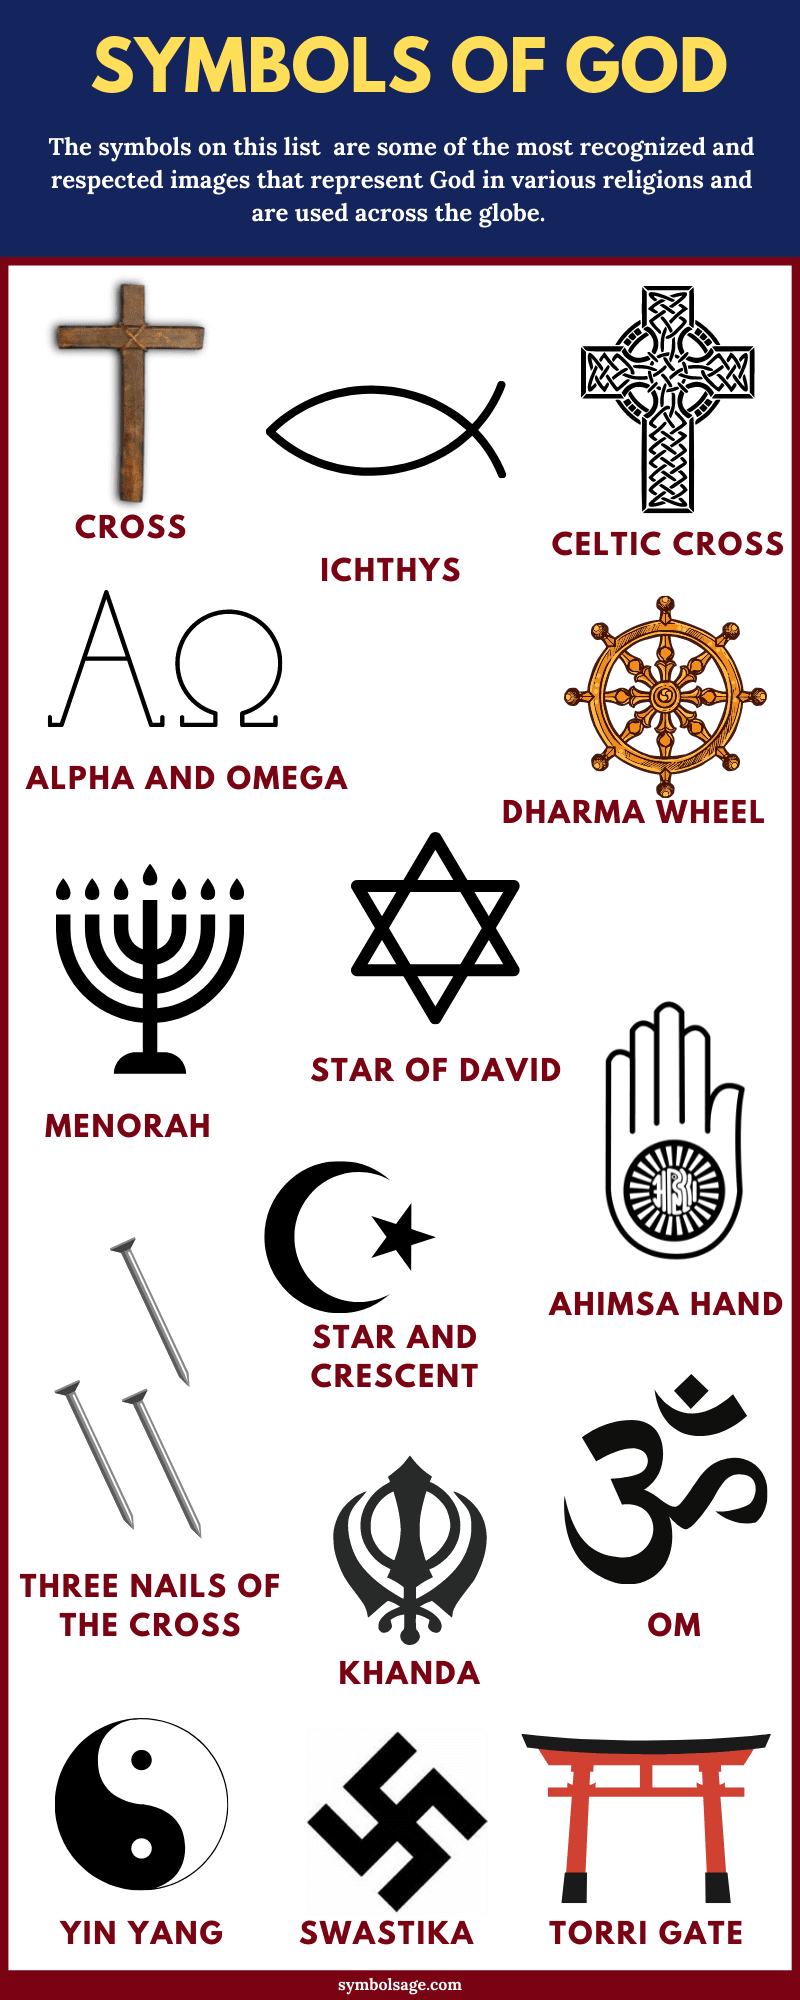 Symbols of god list